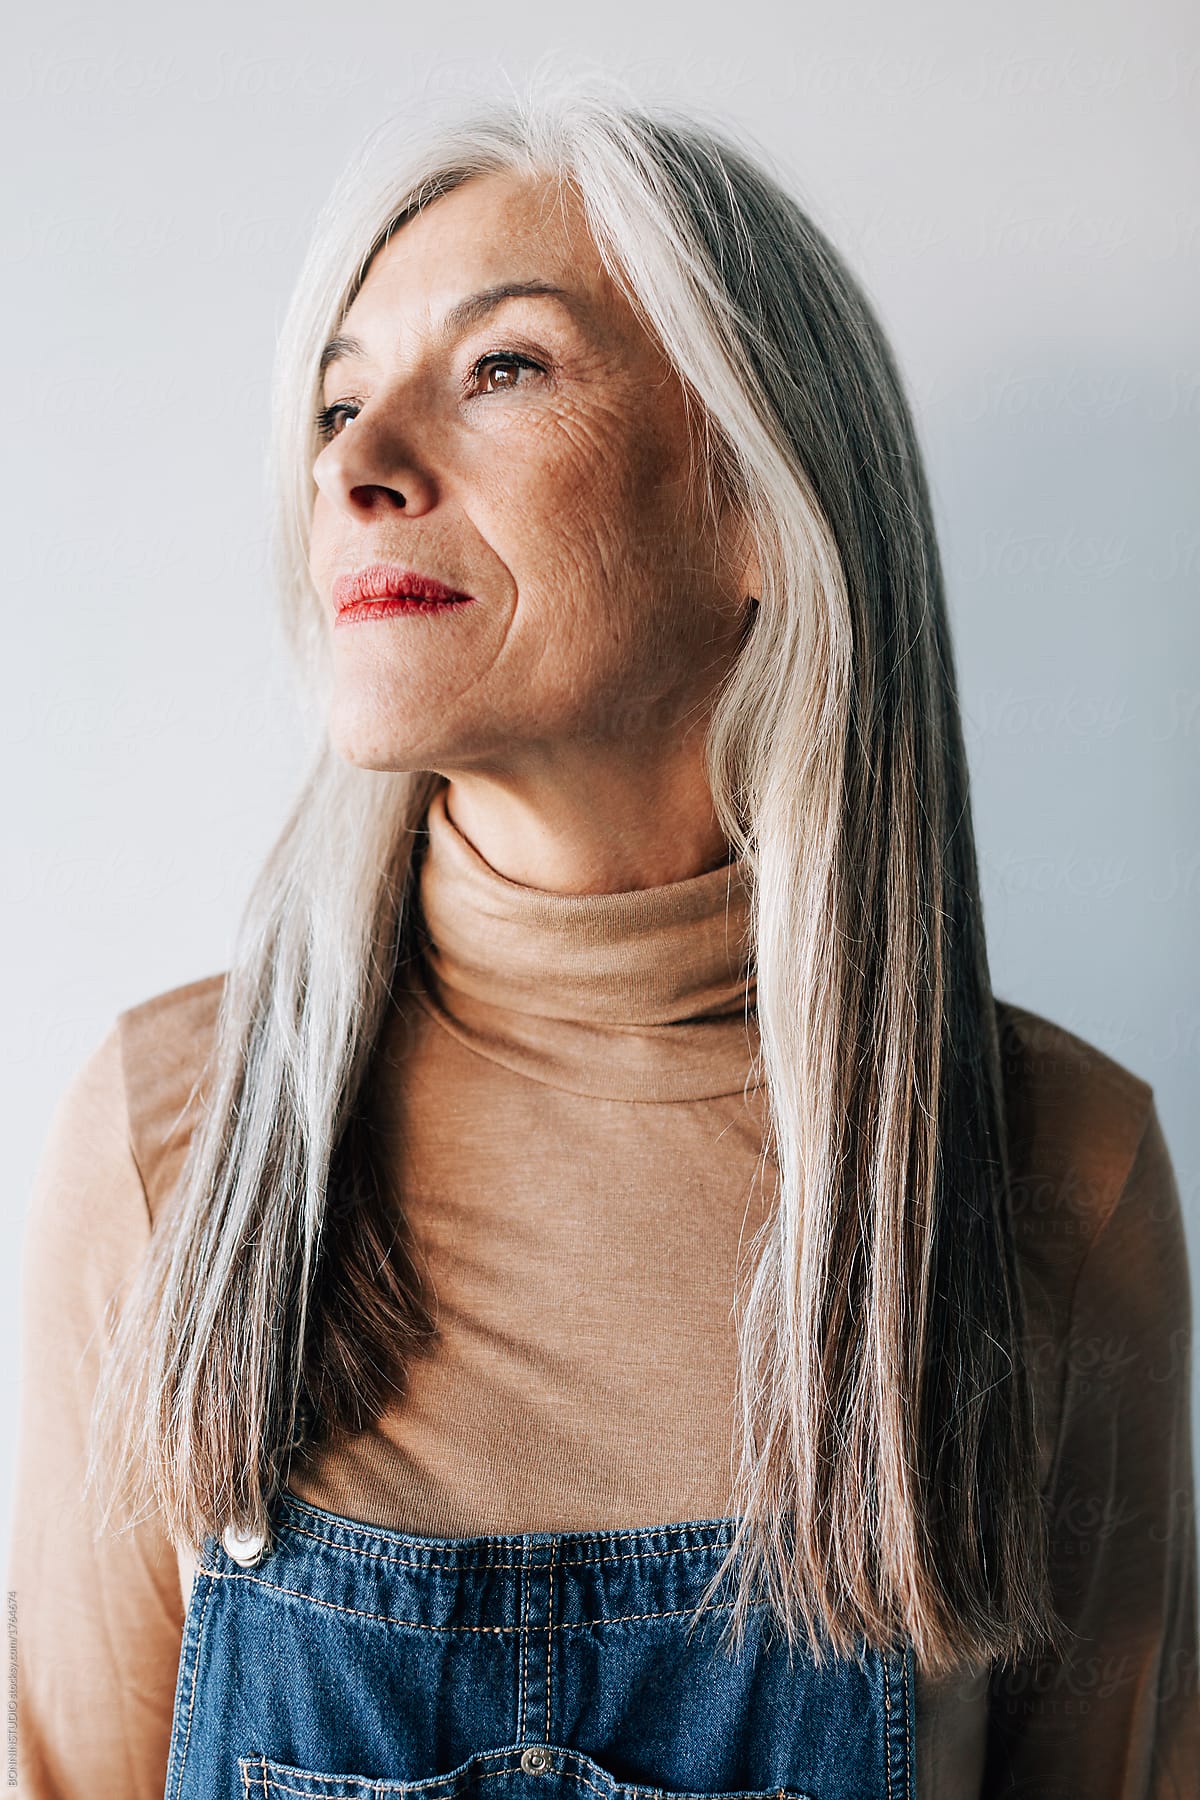 Portrait Of A Senior Woman With Grey Long Hair By Stocksy Contributor Bonninstudio Stocksy